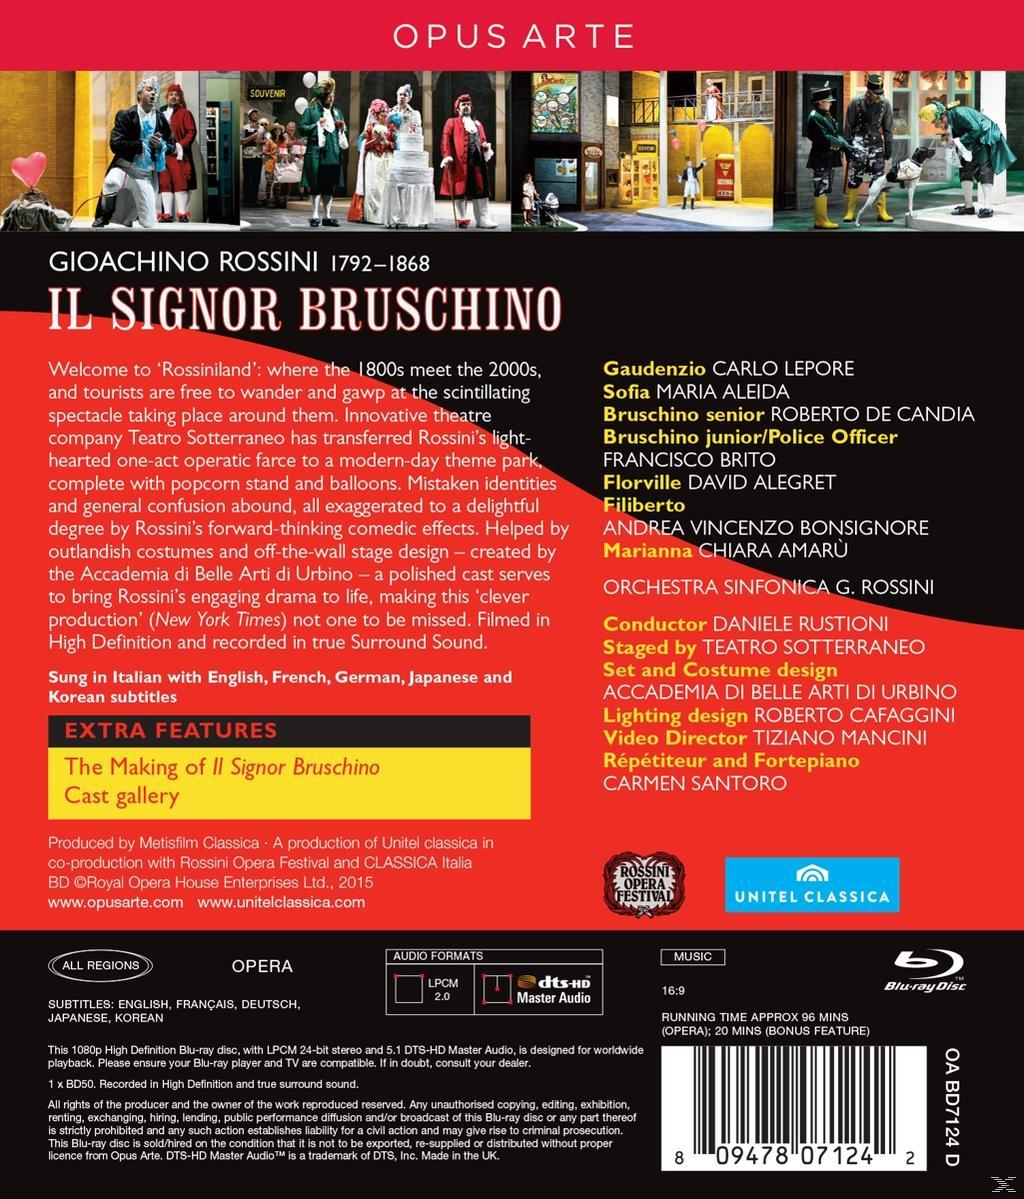 VARIOUS - Il Signor Bruschino - (Blu-ray)